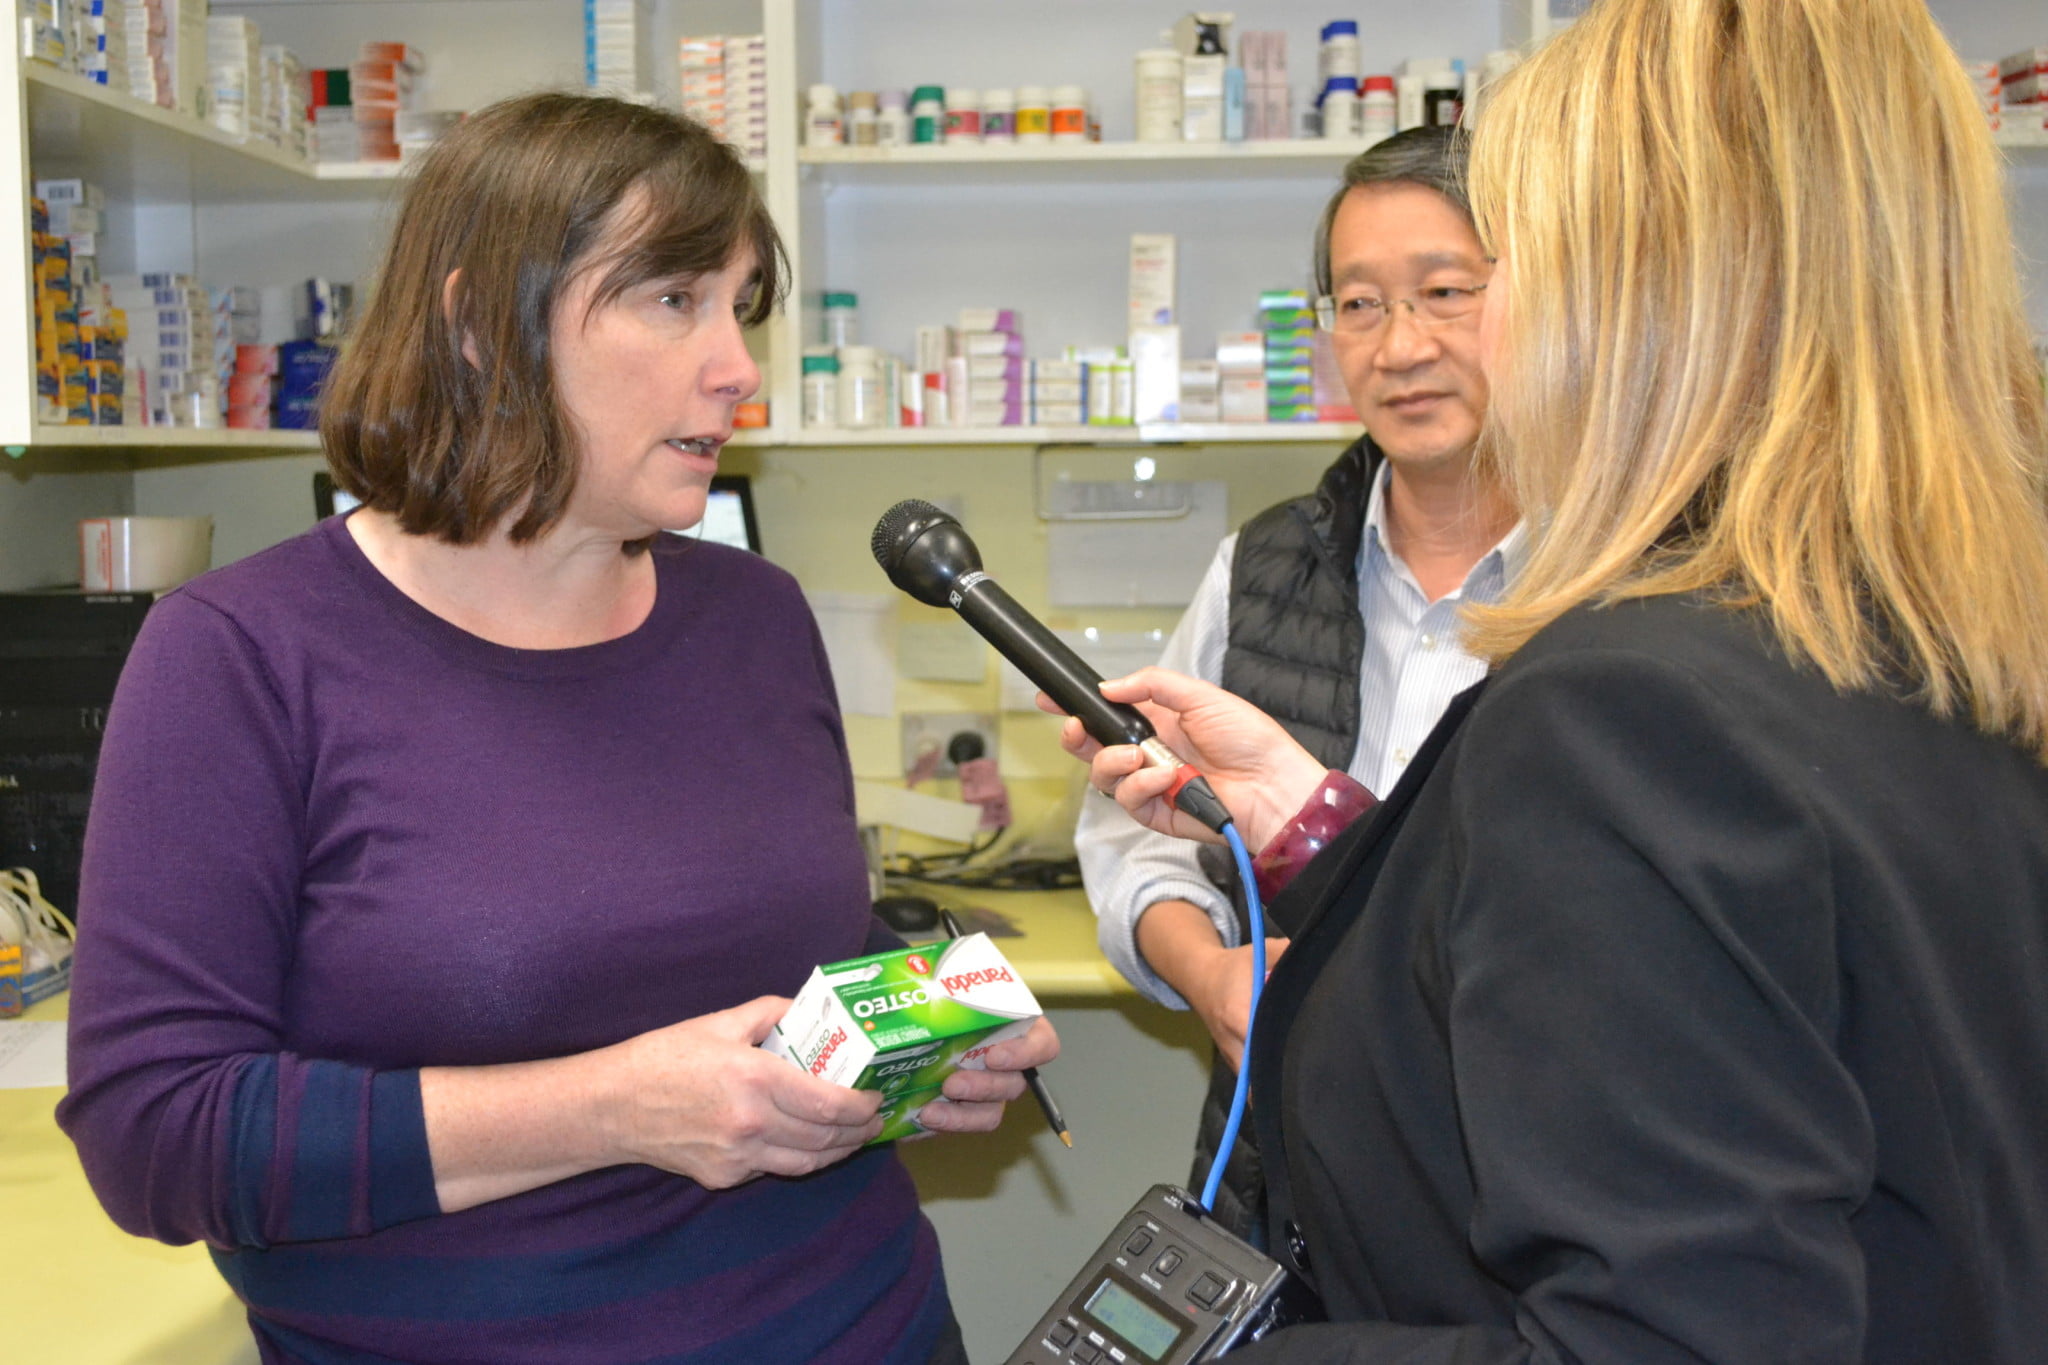 Ruth Cerone interviewed regarding pharmacy defunding